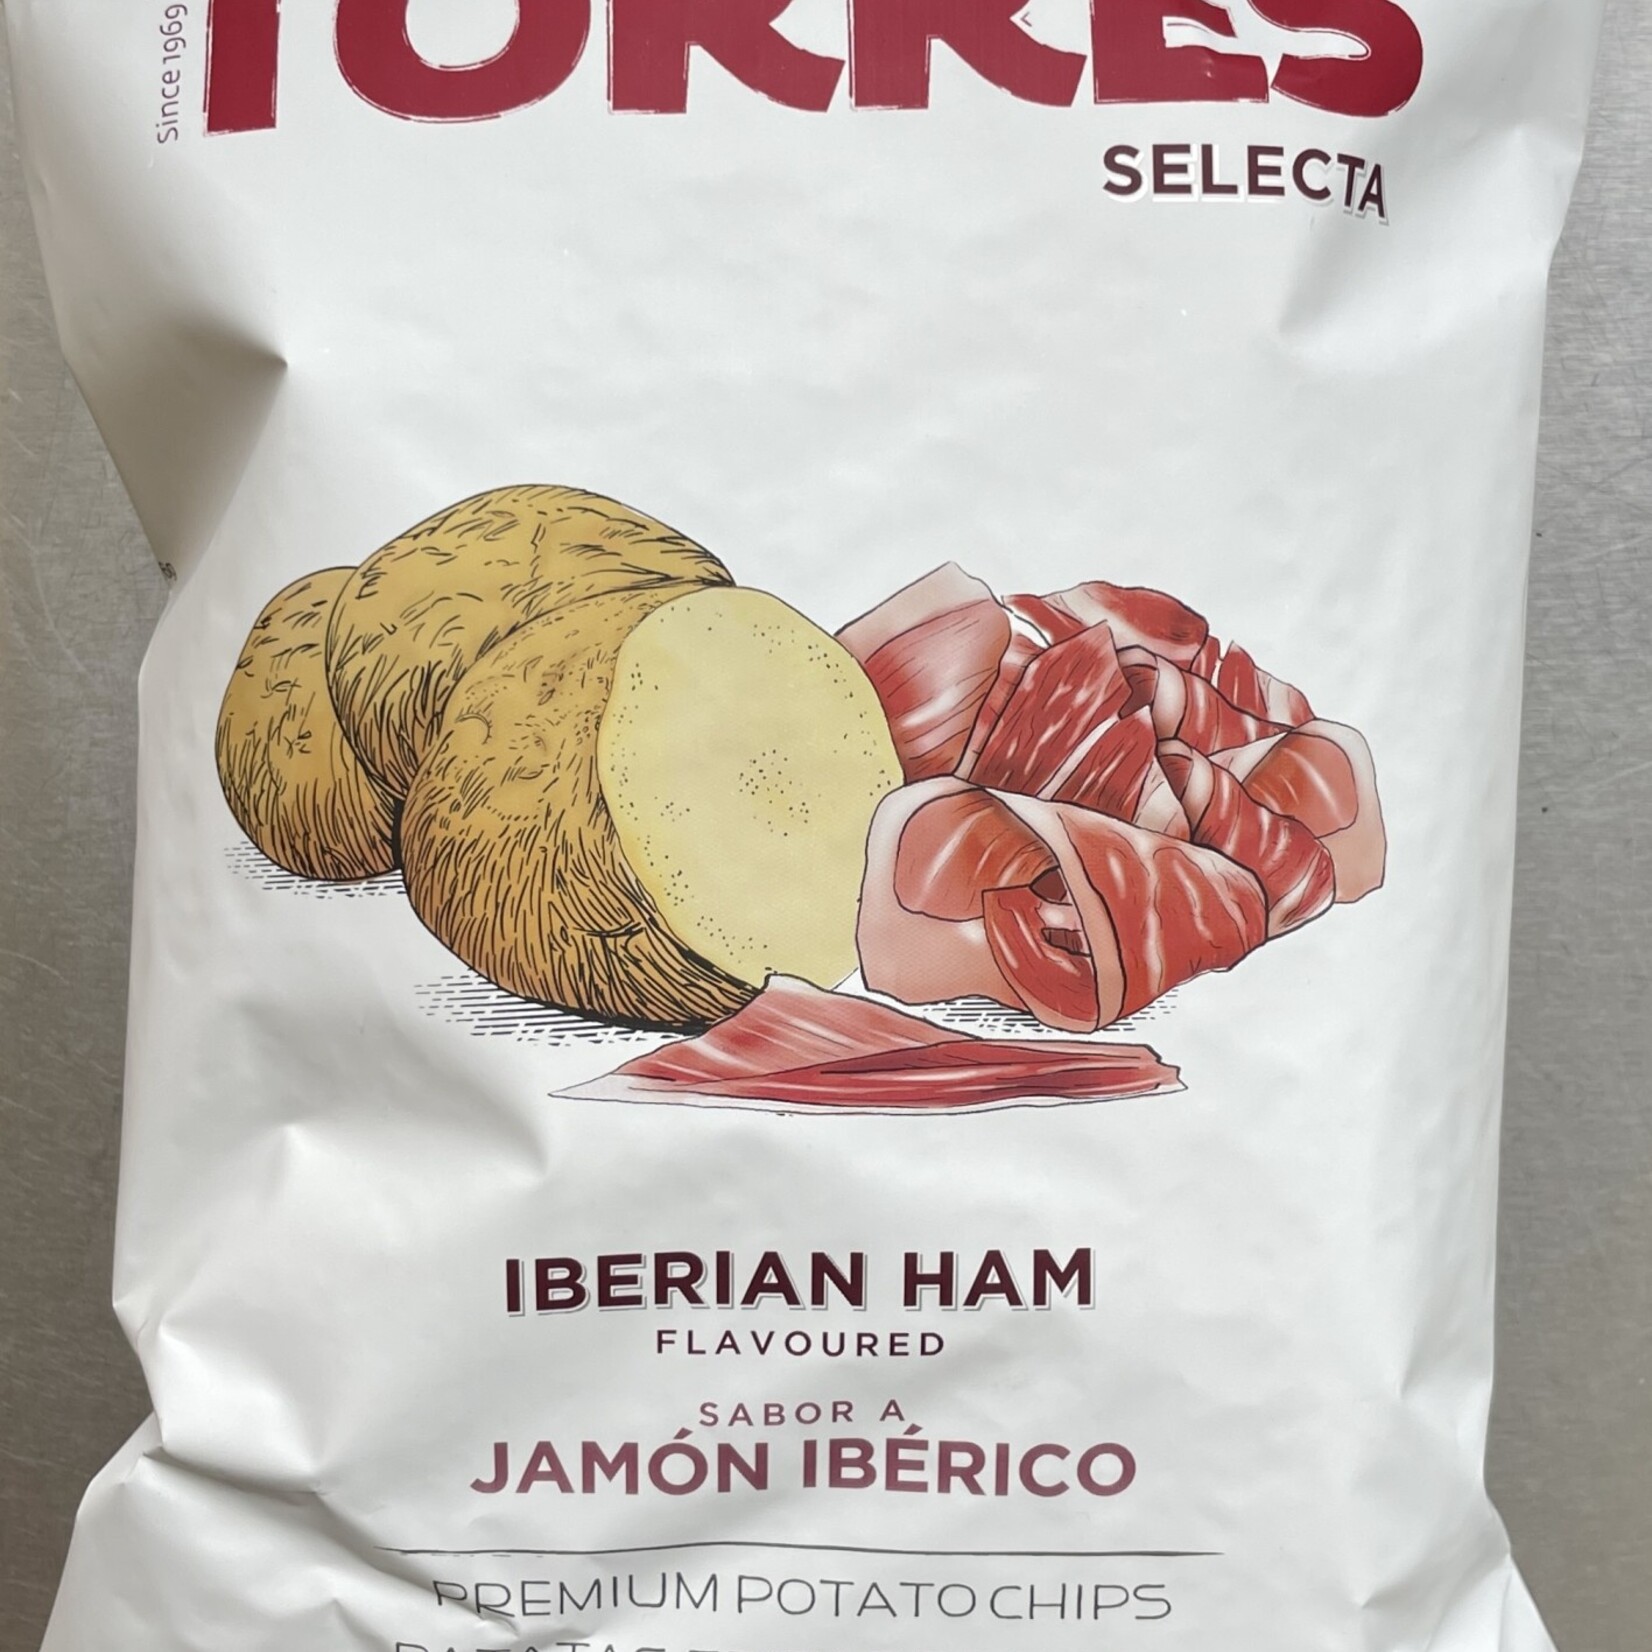 USA Torres Selecta Potato Chips Large